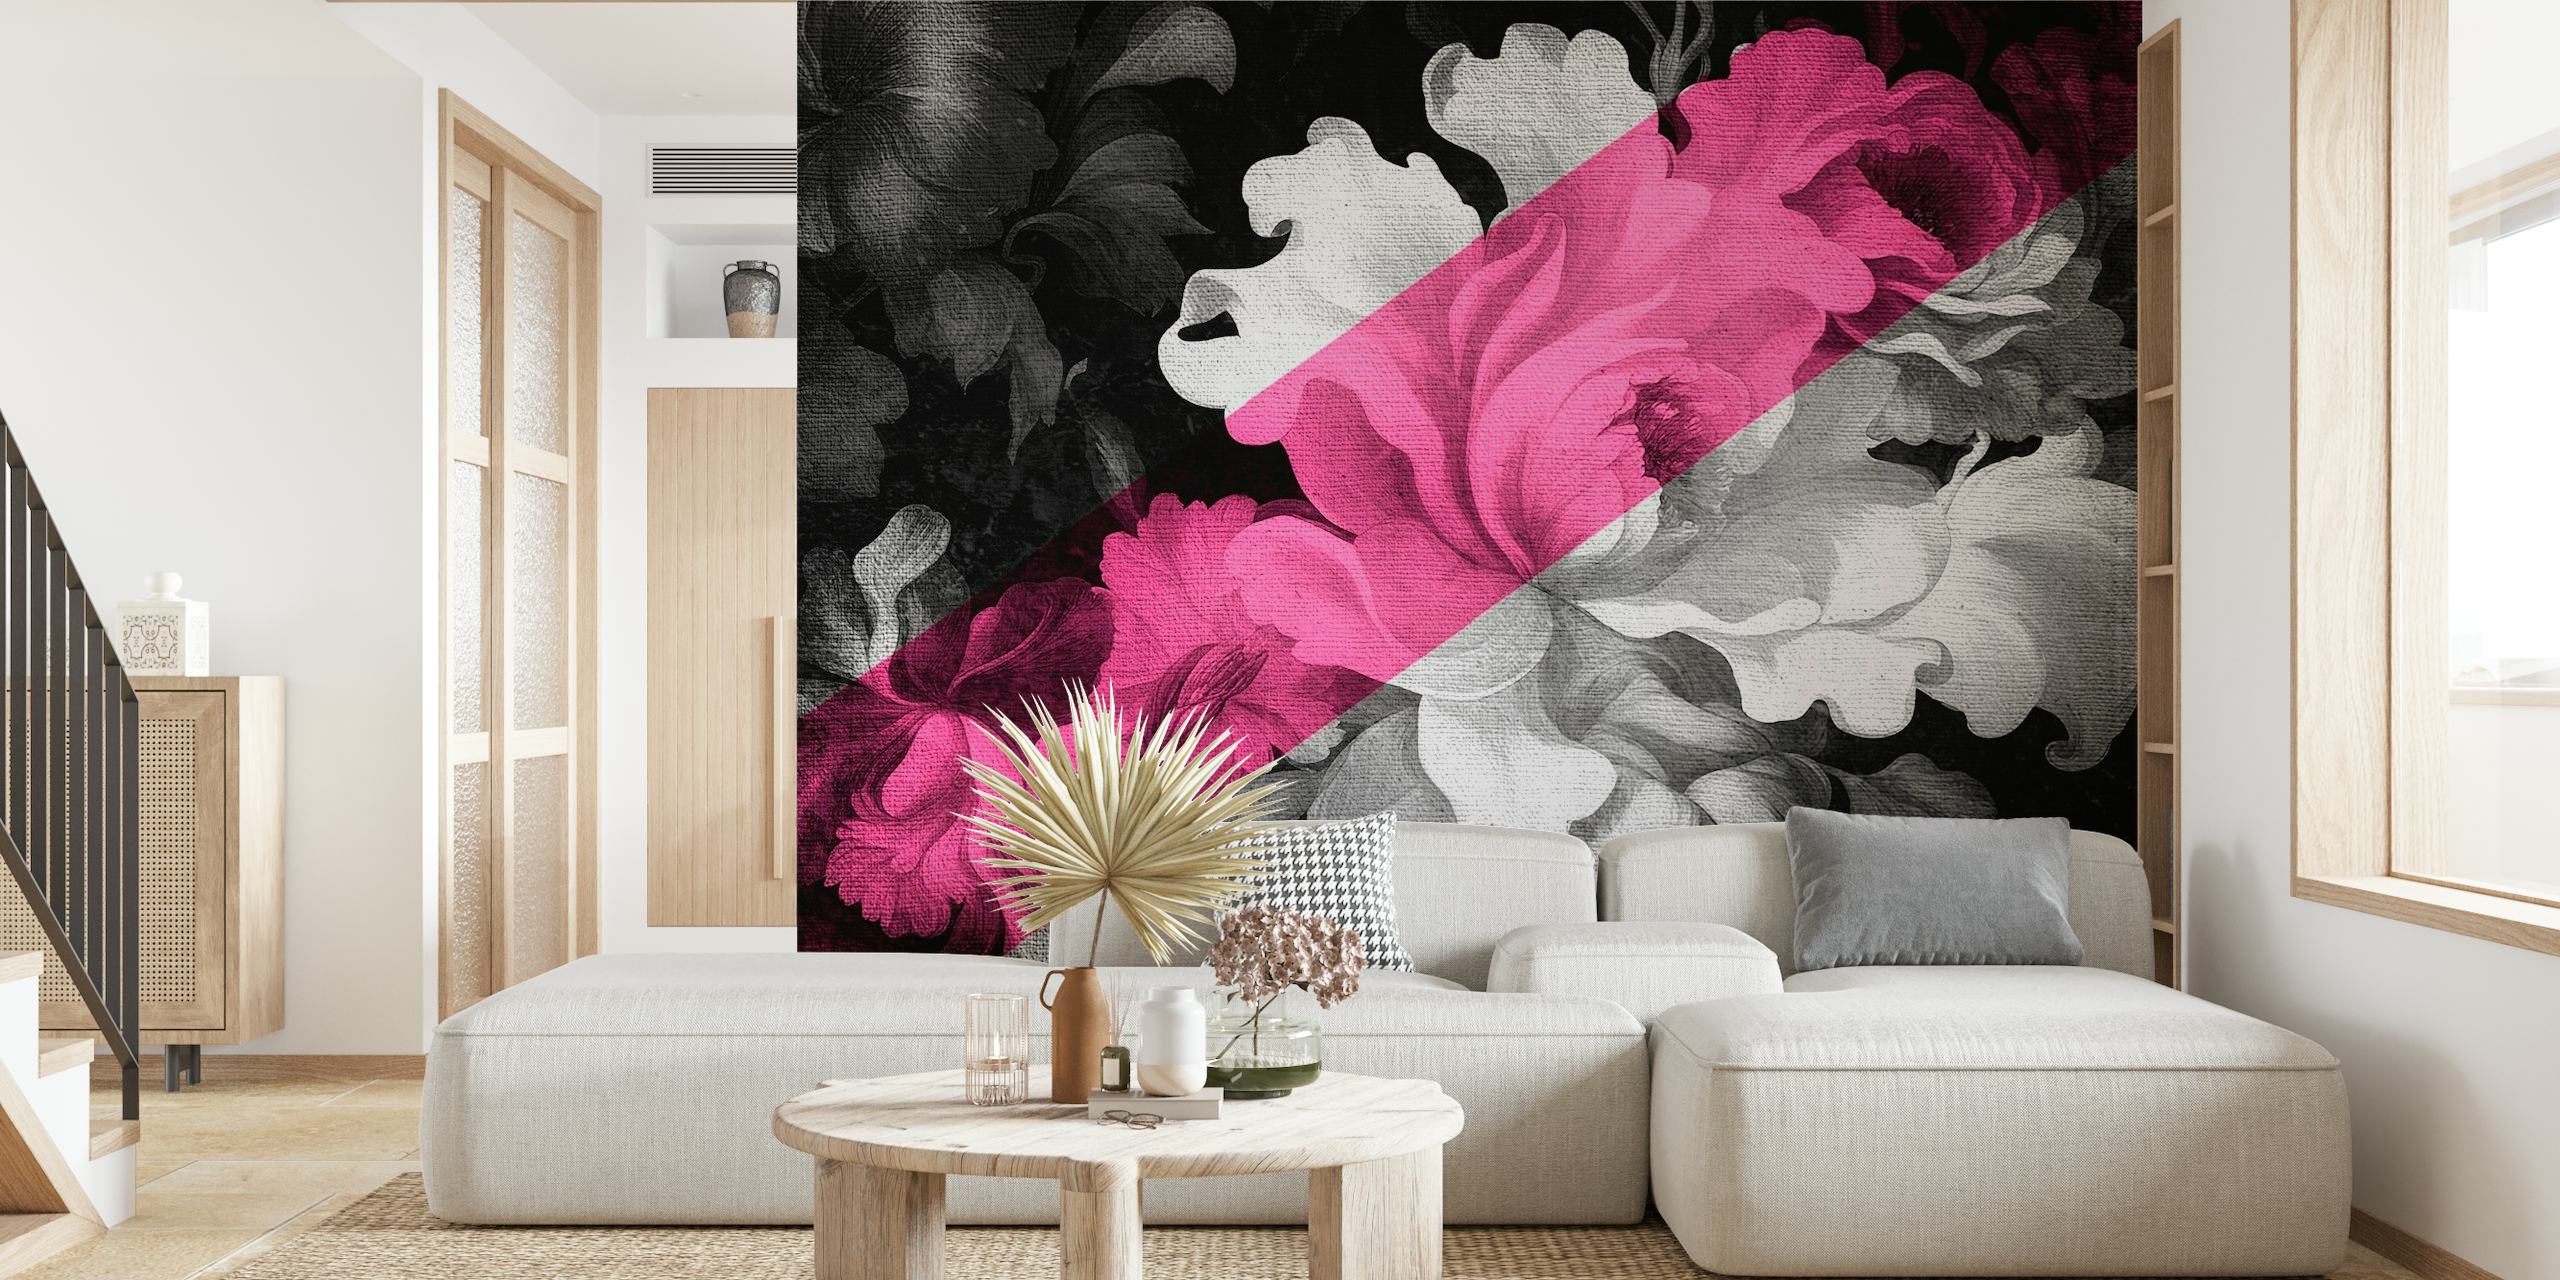 Monochrome and pink floral wall mural blending Renaissance and modern pop art styles